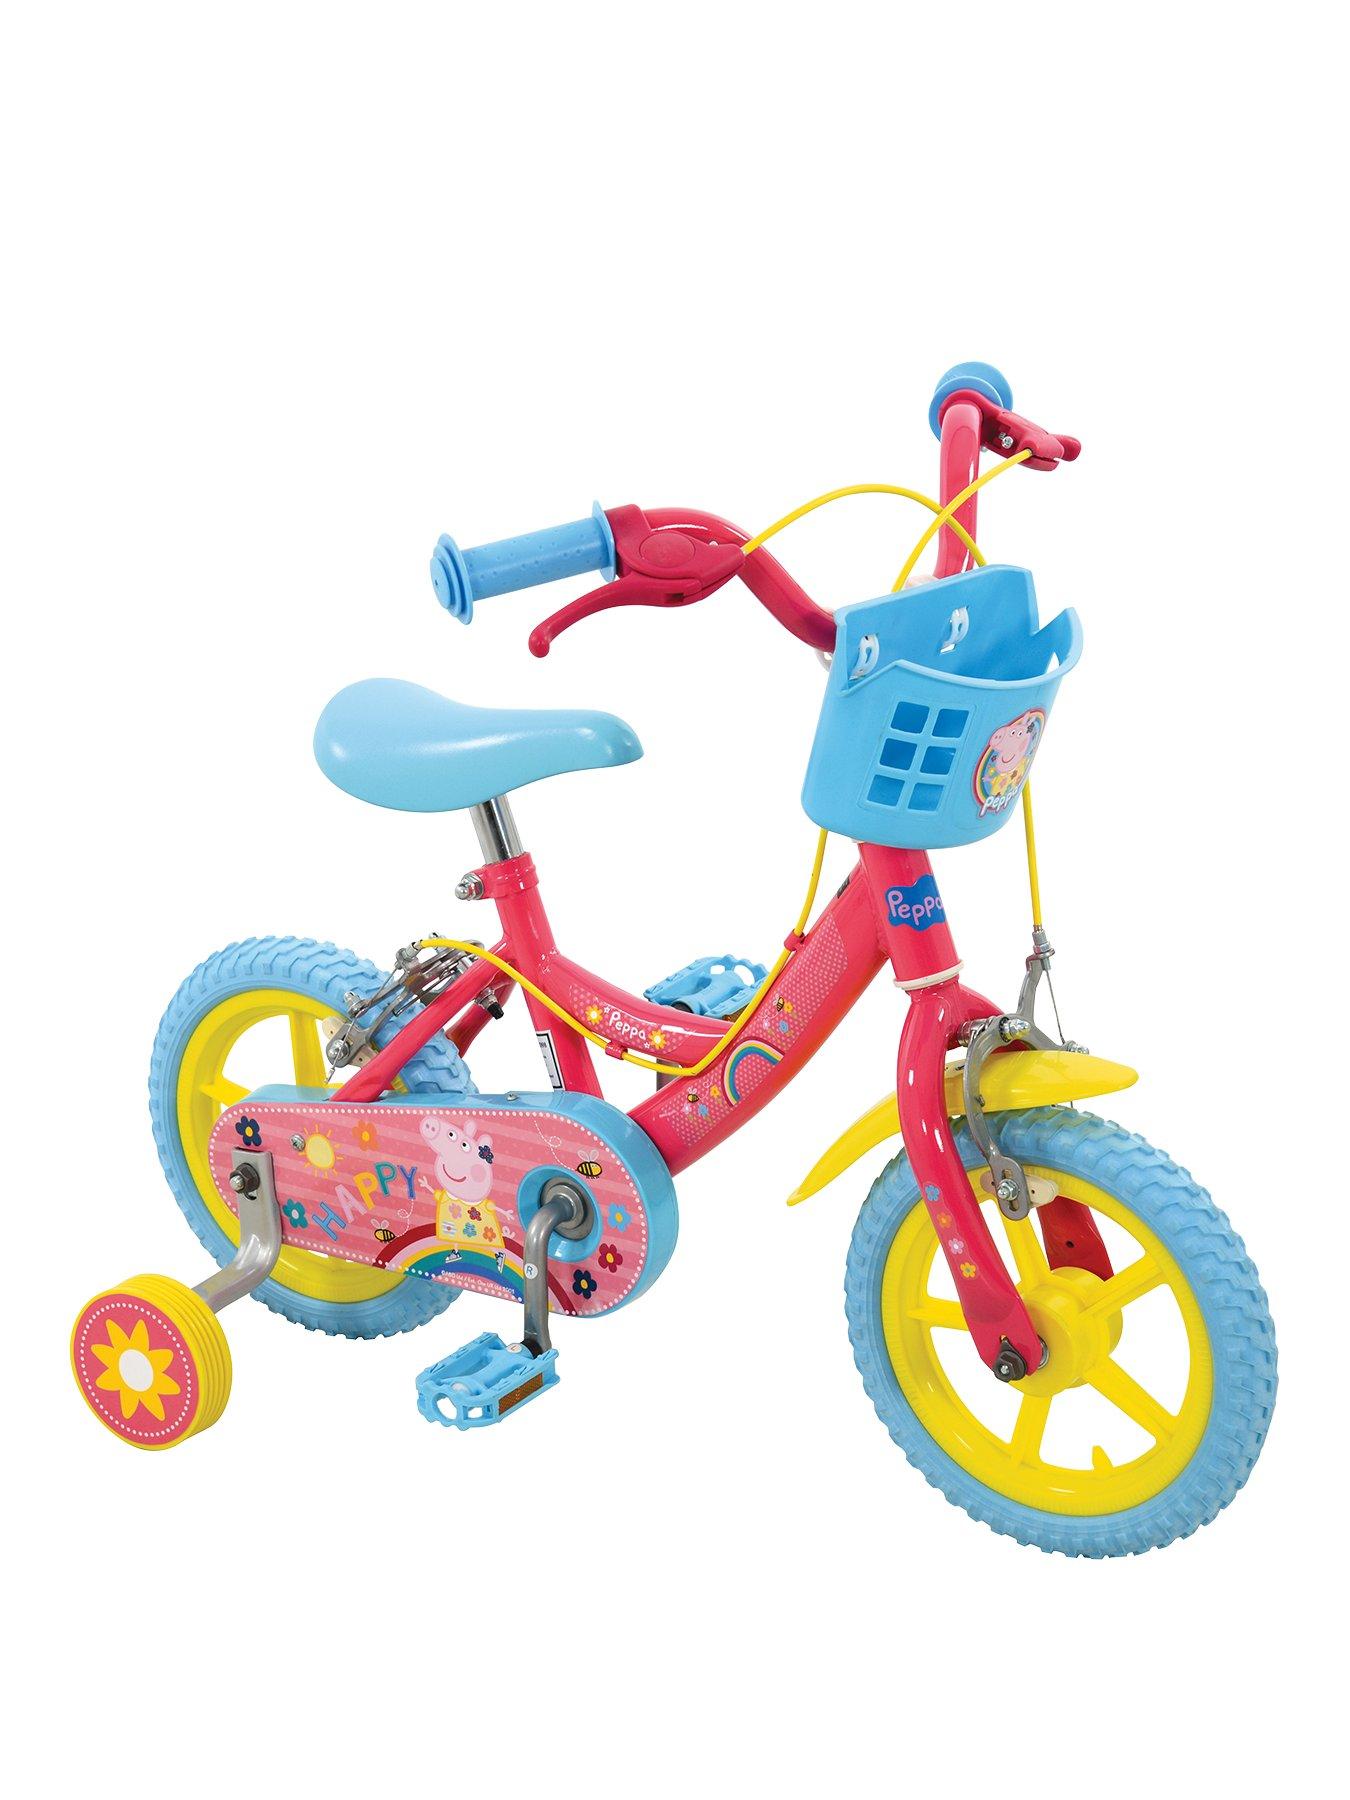 peppa pig bike with doll seat